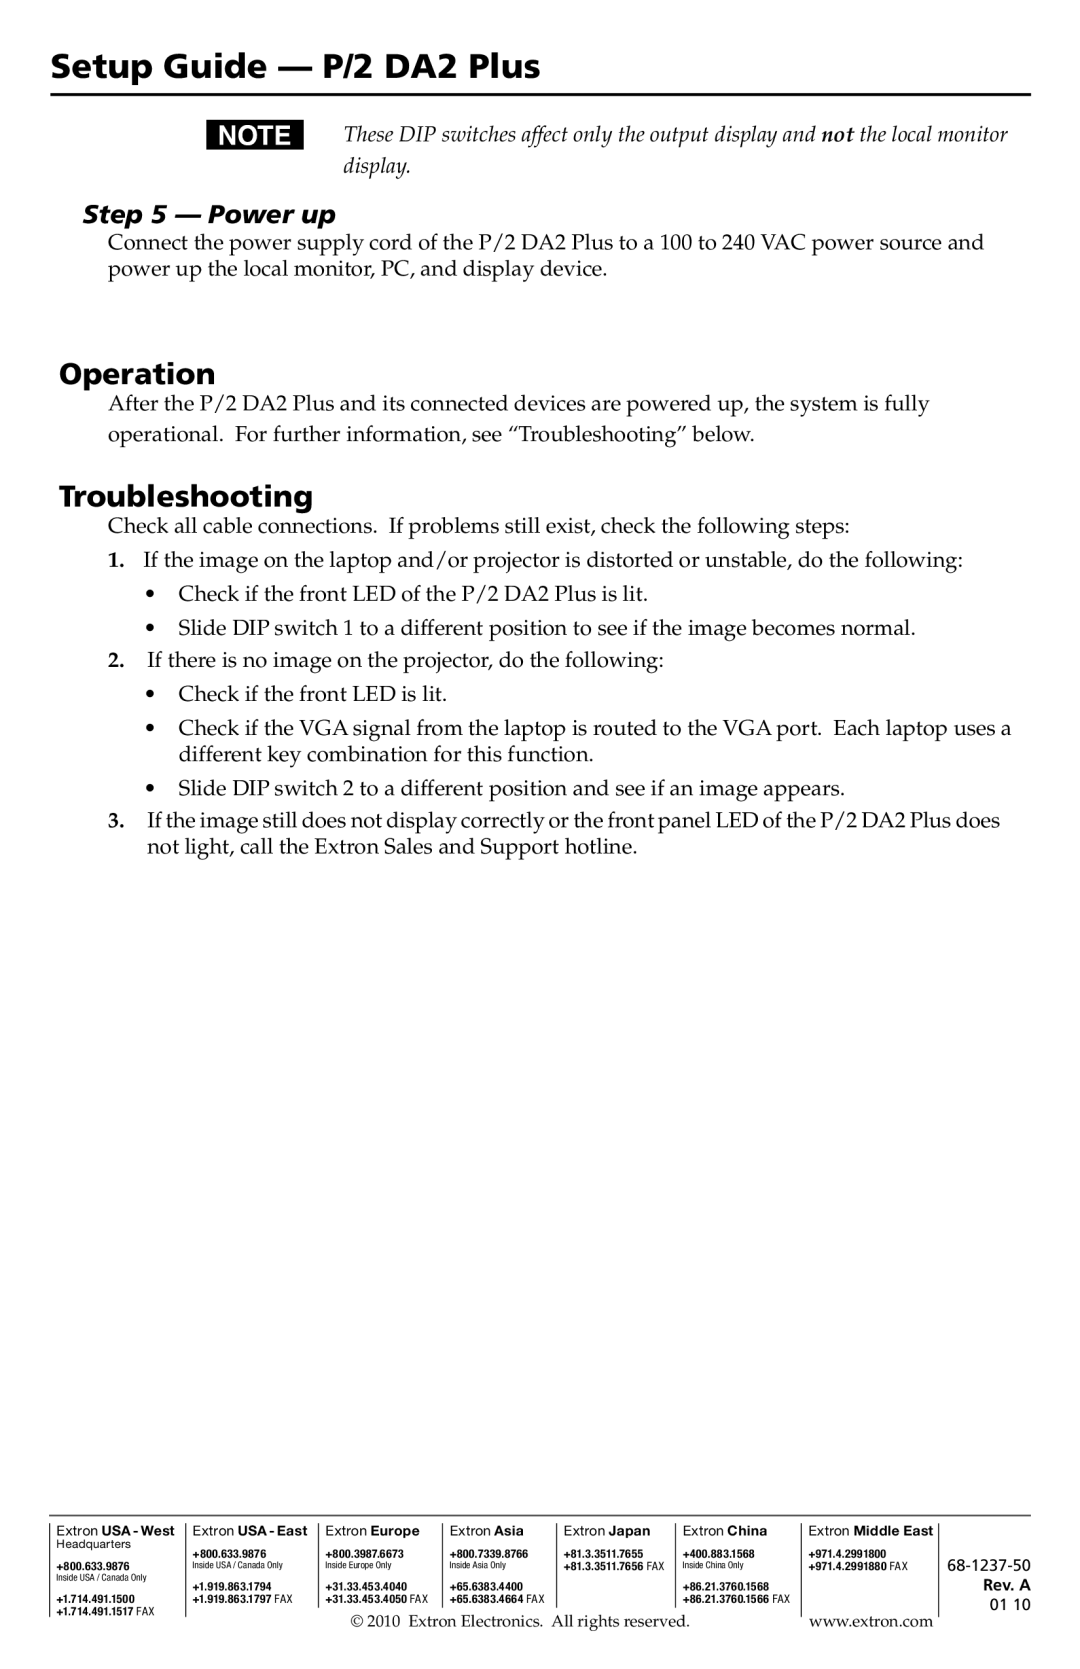 Extron electronic setup guide Operation, Troubleshooting, Power up, Setup Guide -­P/2 DA2 Plus 